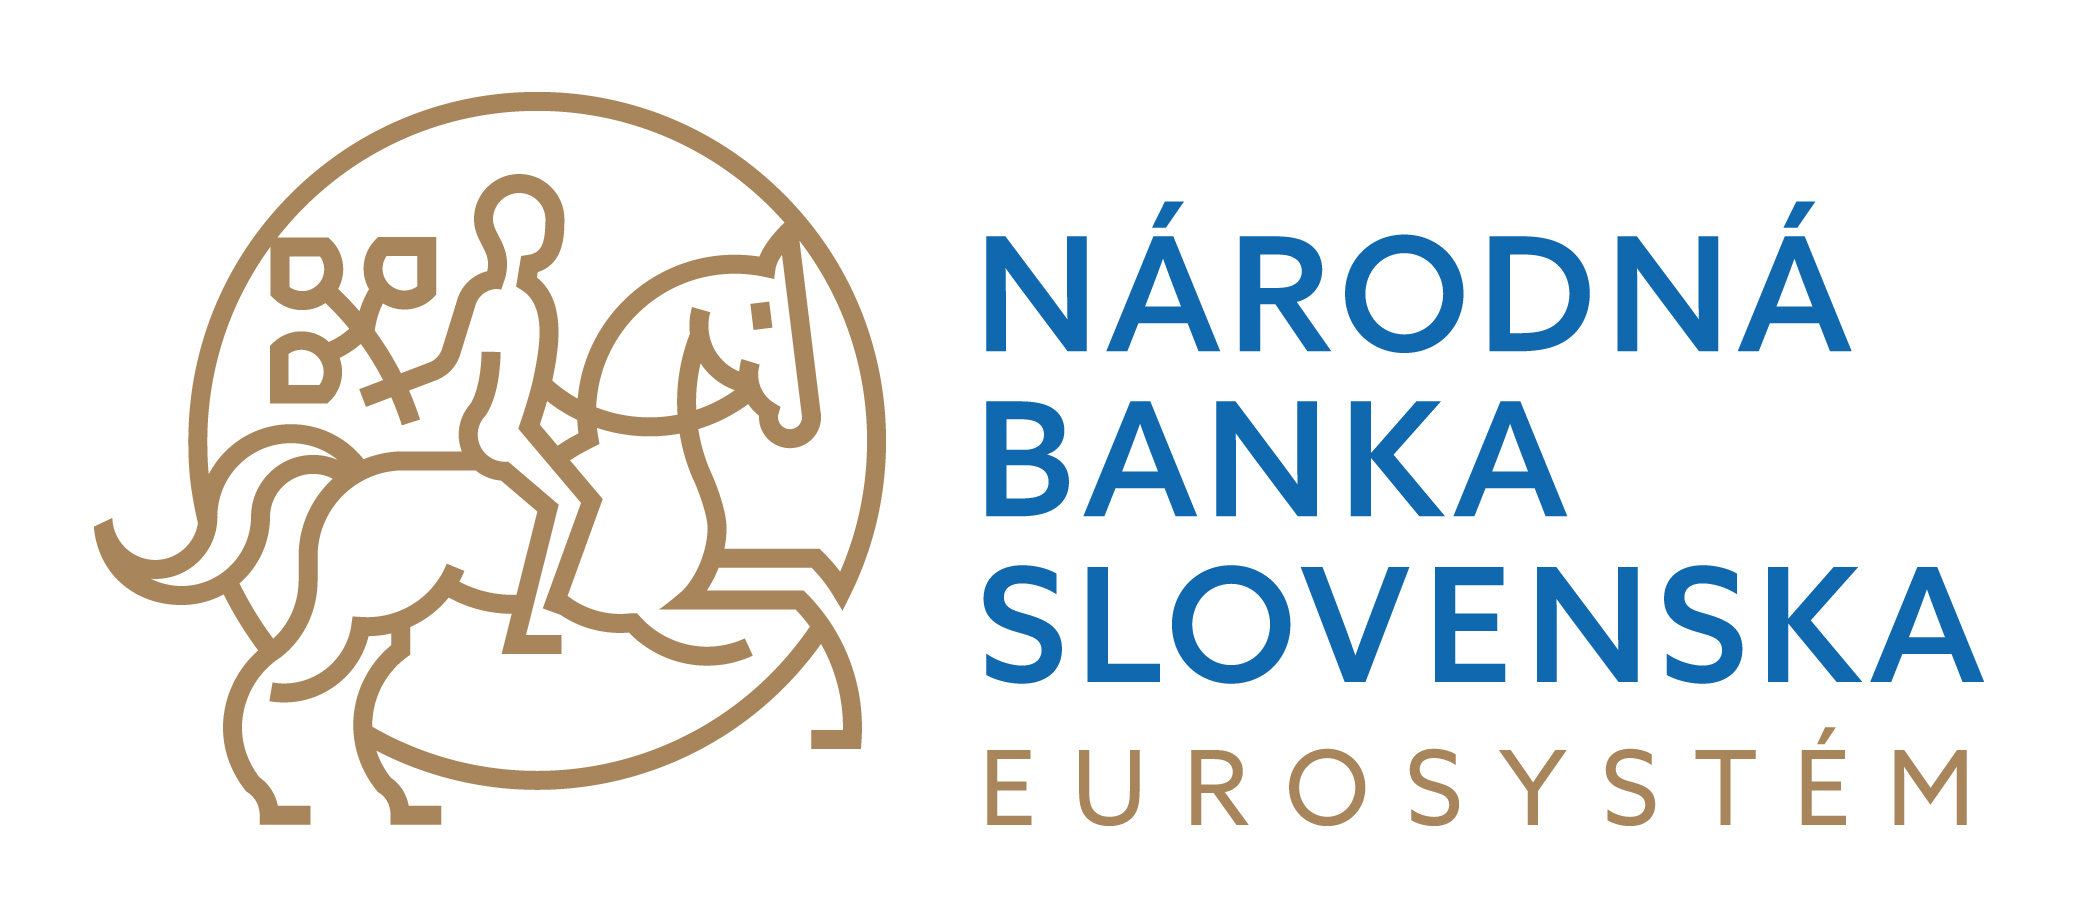 Narodna banka slovenska